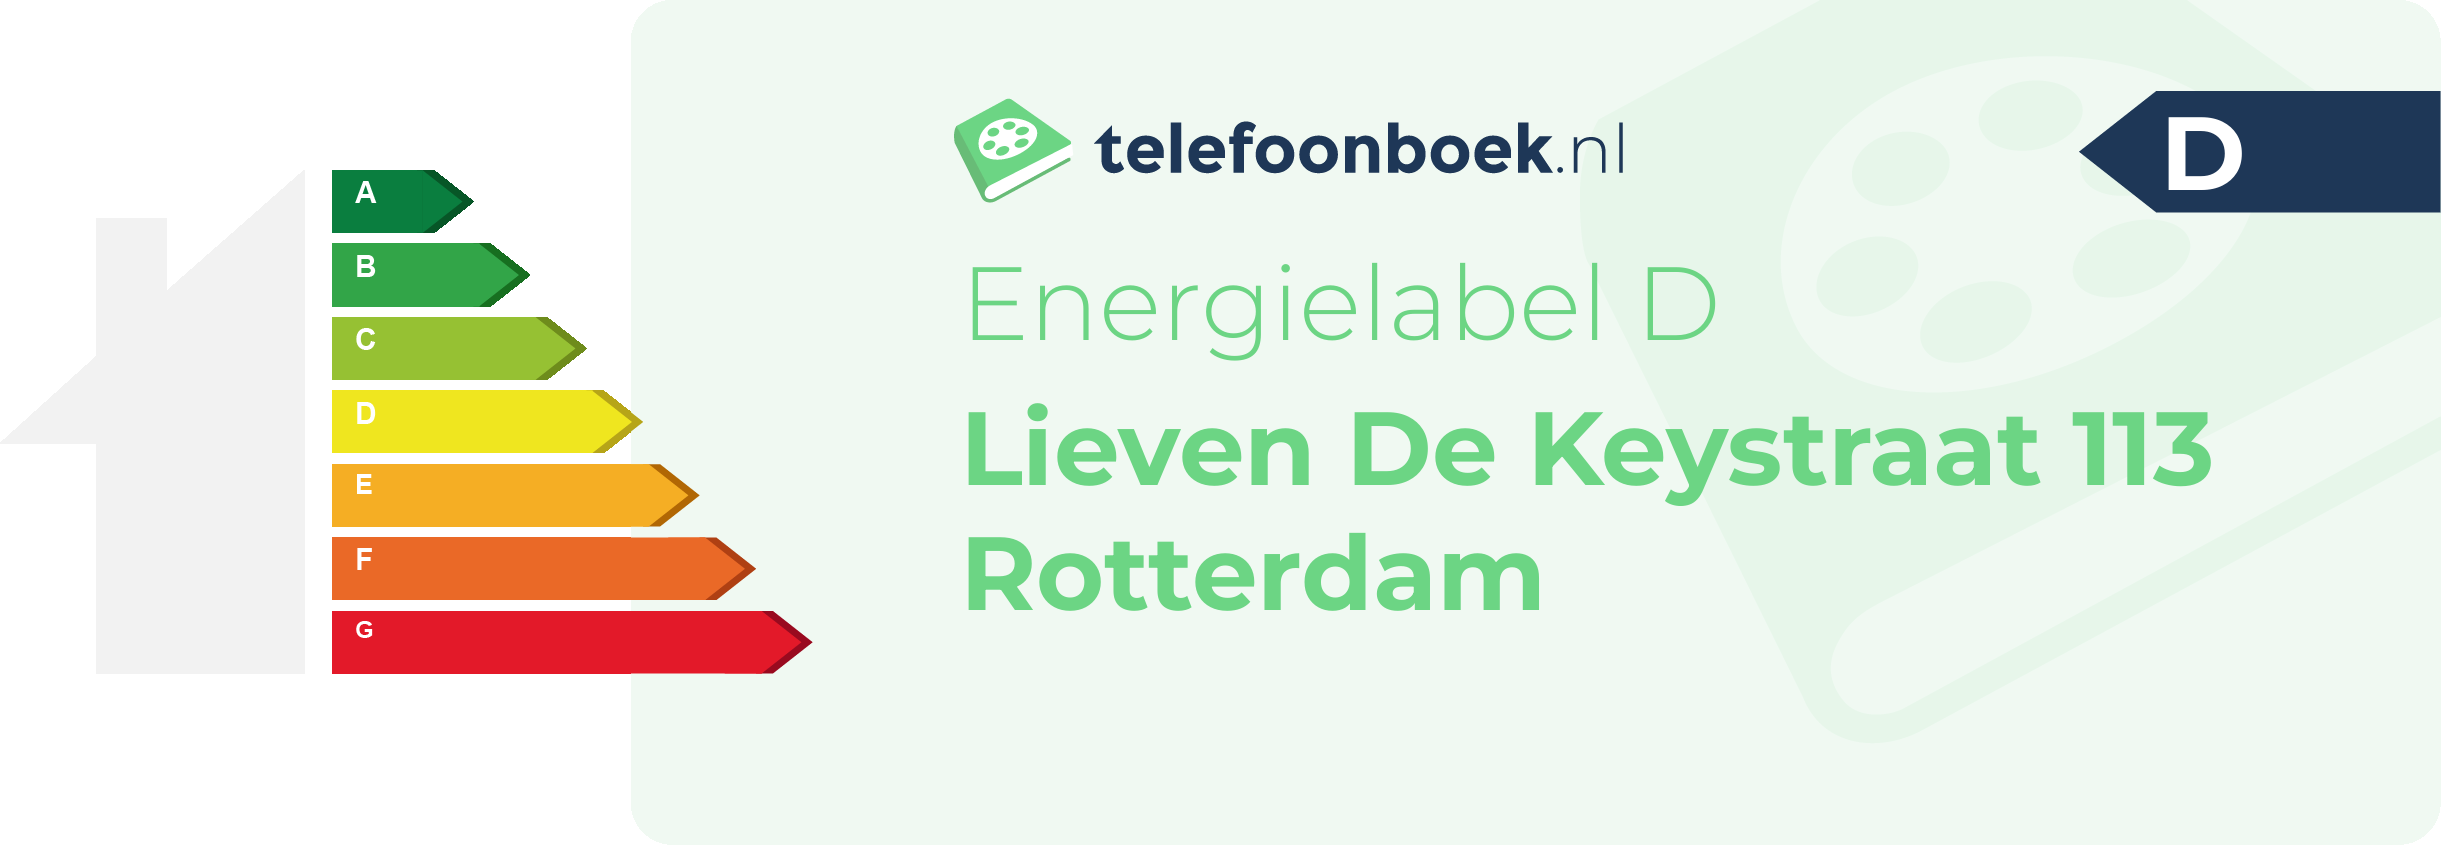 Energielabel Lieven De Keystraat 113 Rotterdam